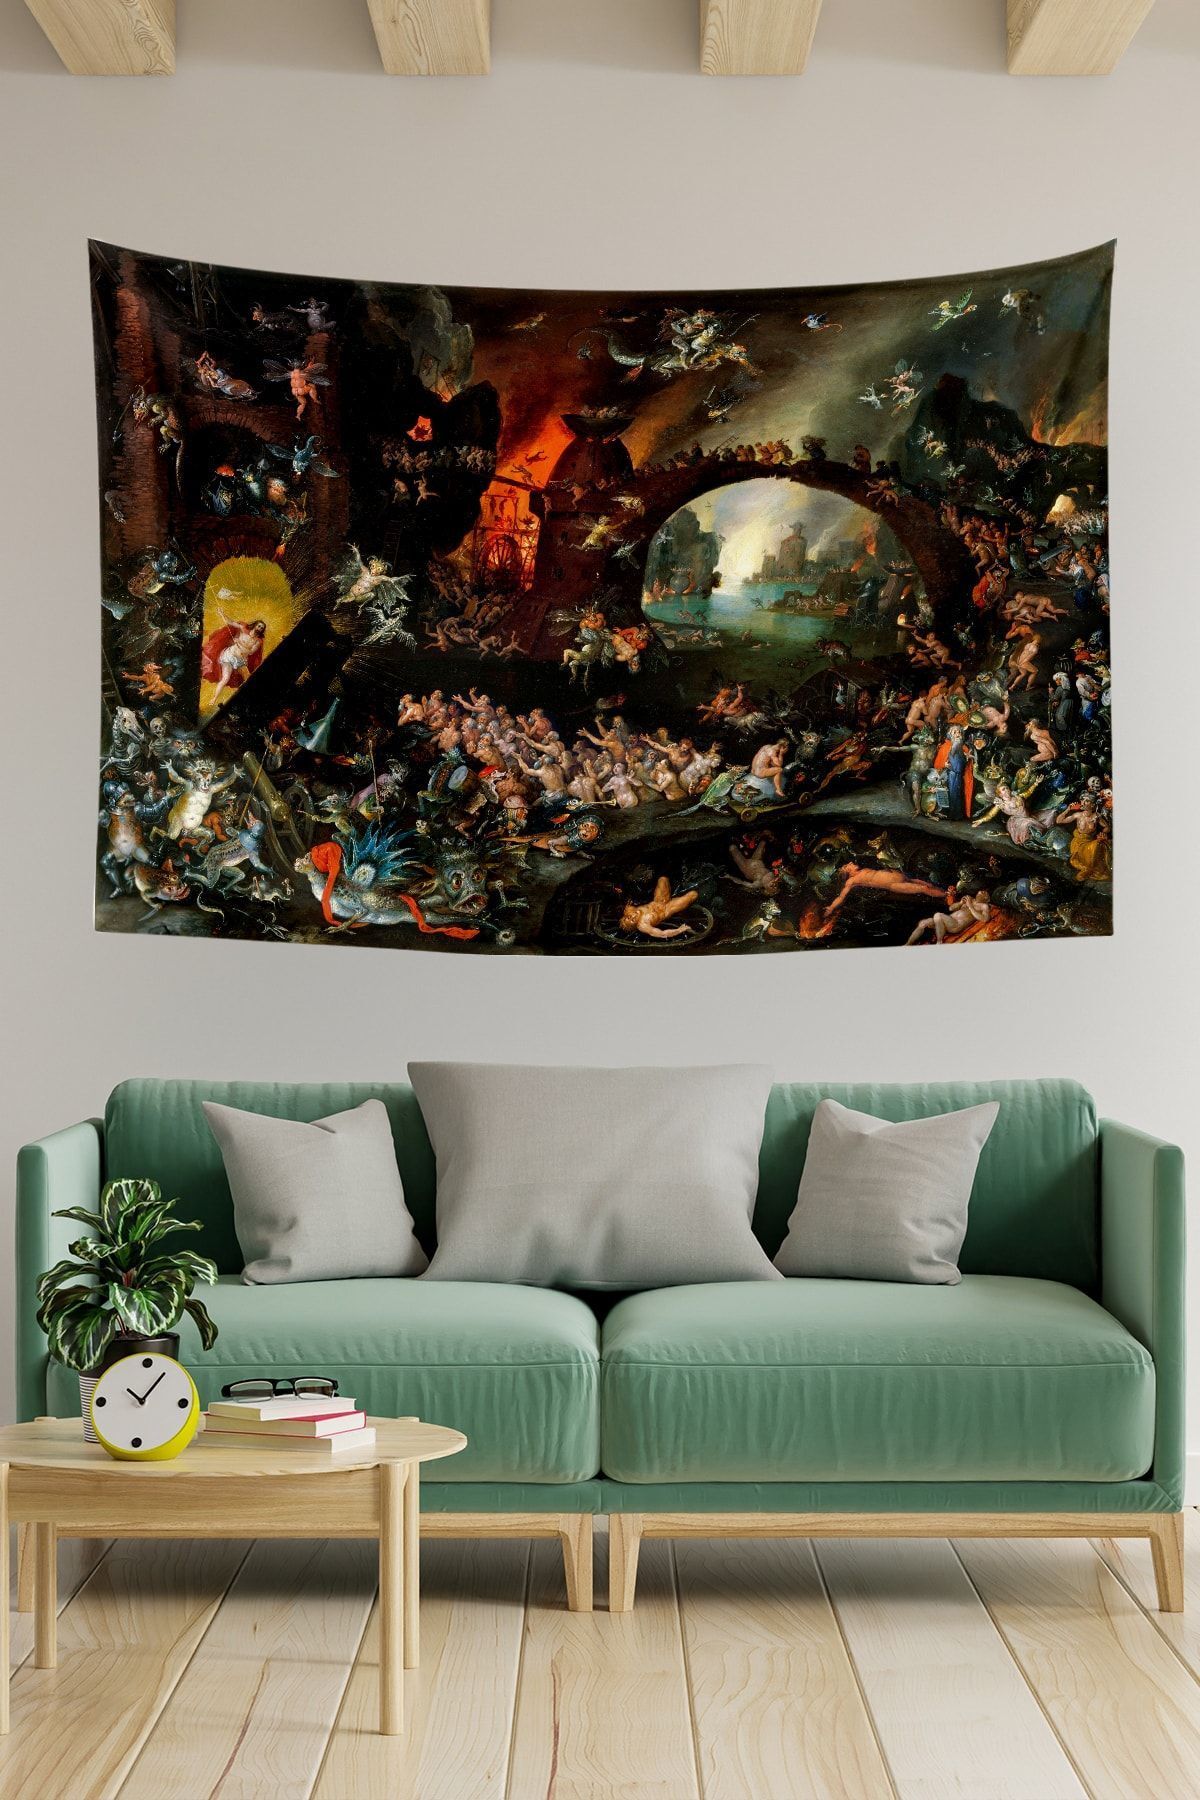 KanvasSepeti Hieronymus Bosch Tablosu Duvar Örtüsü Yağlı Boya Dokulu   TYCIP2579N168632125910869